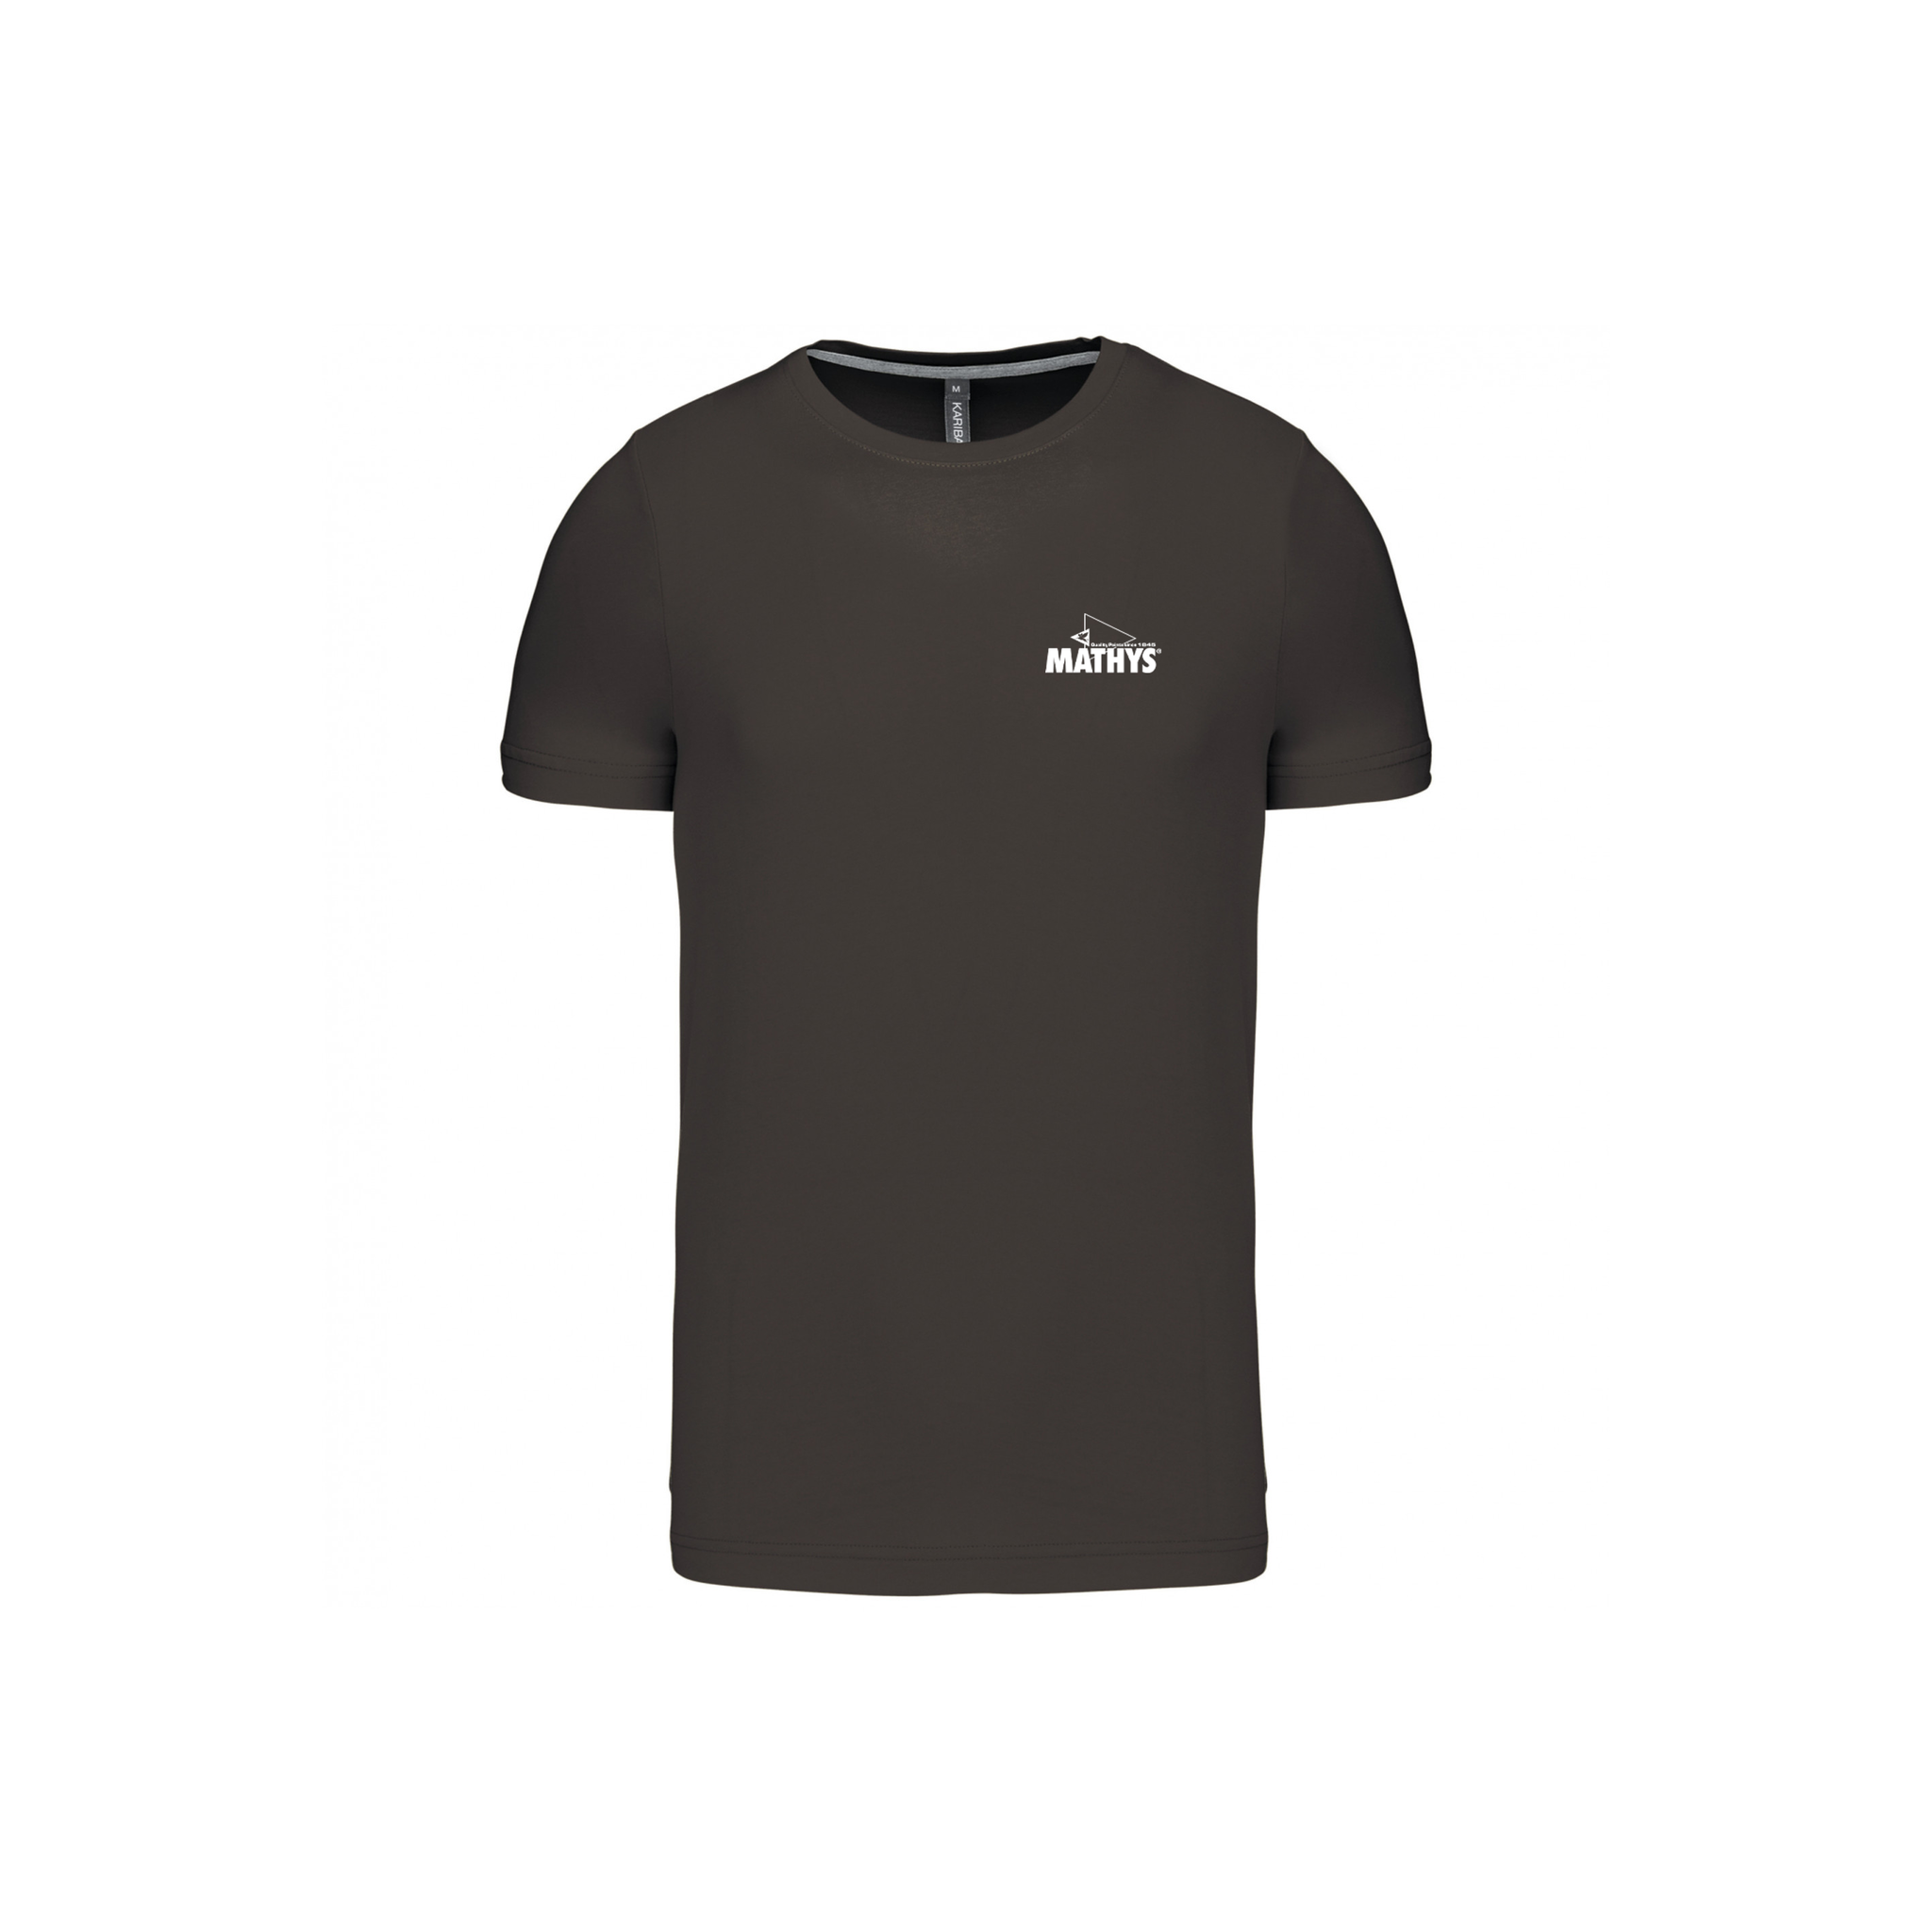 Topfanz t-shirt dark grey Mathys men